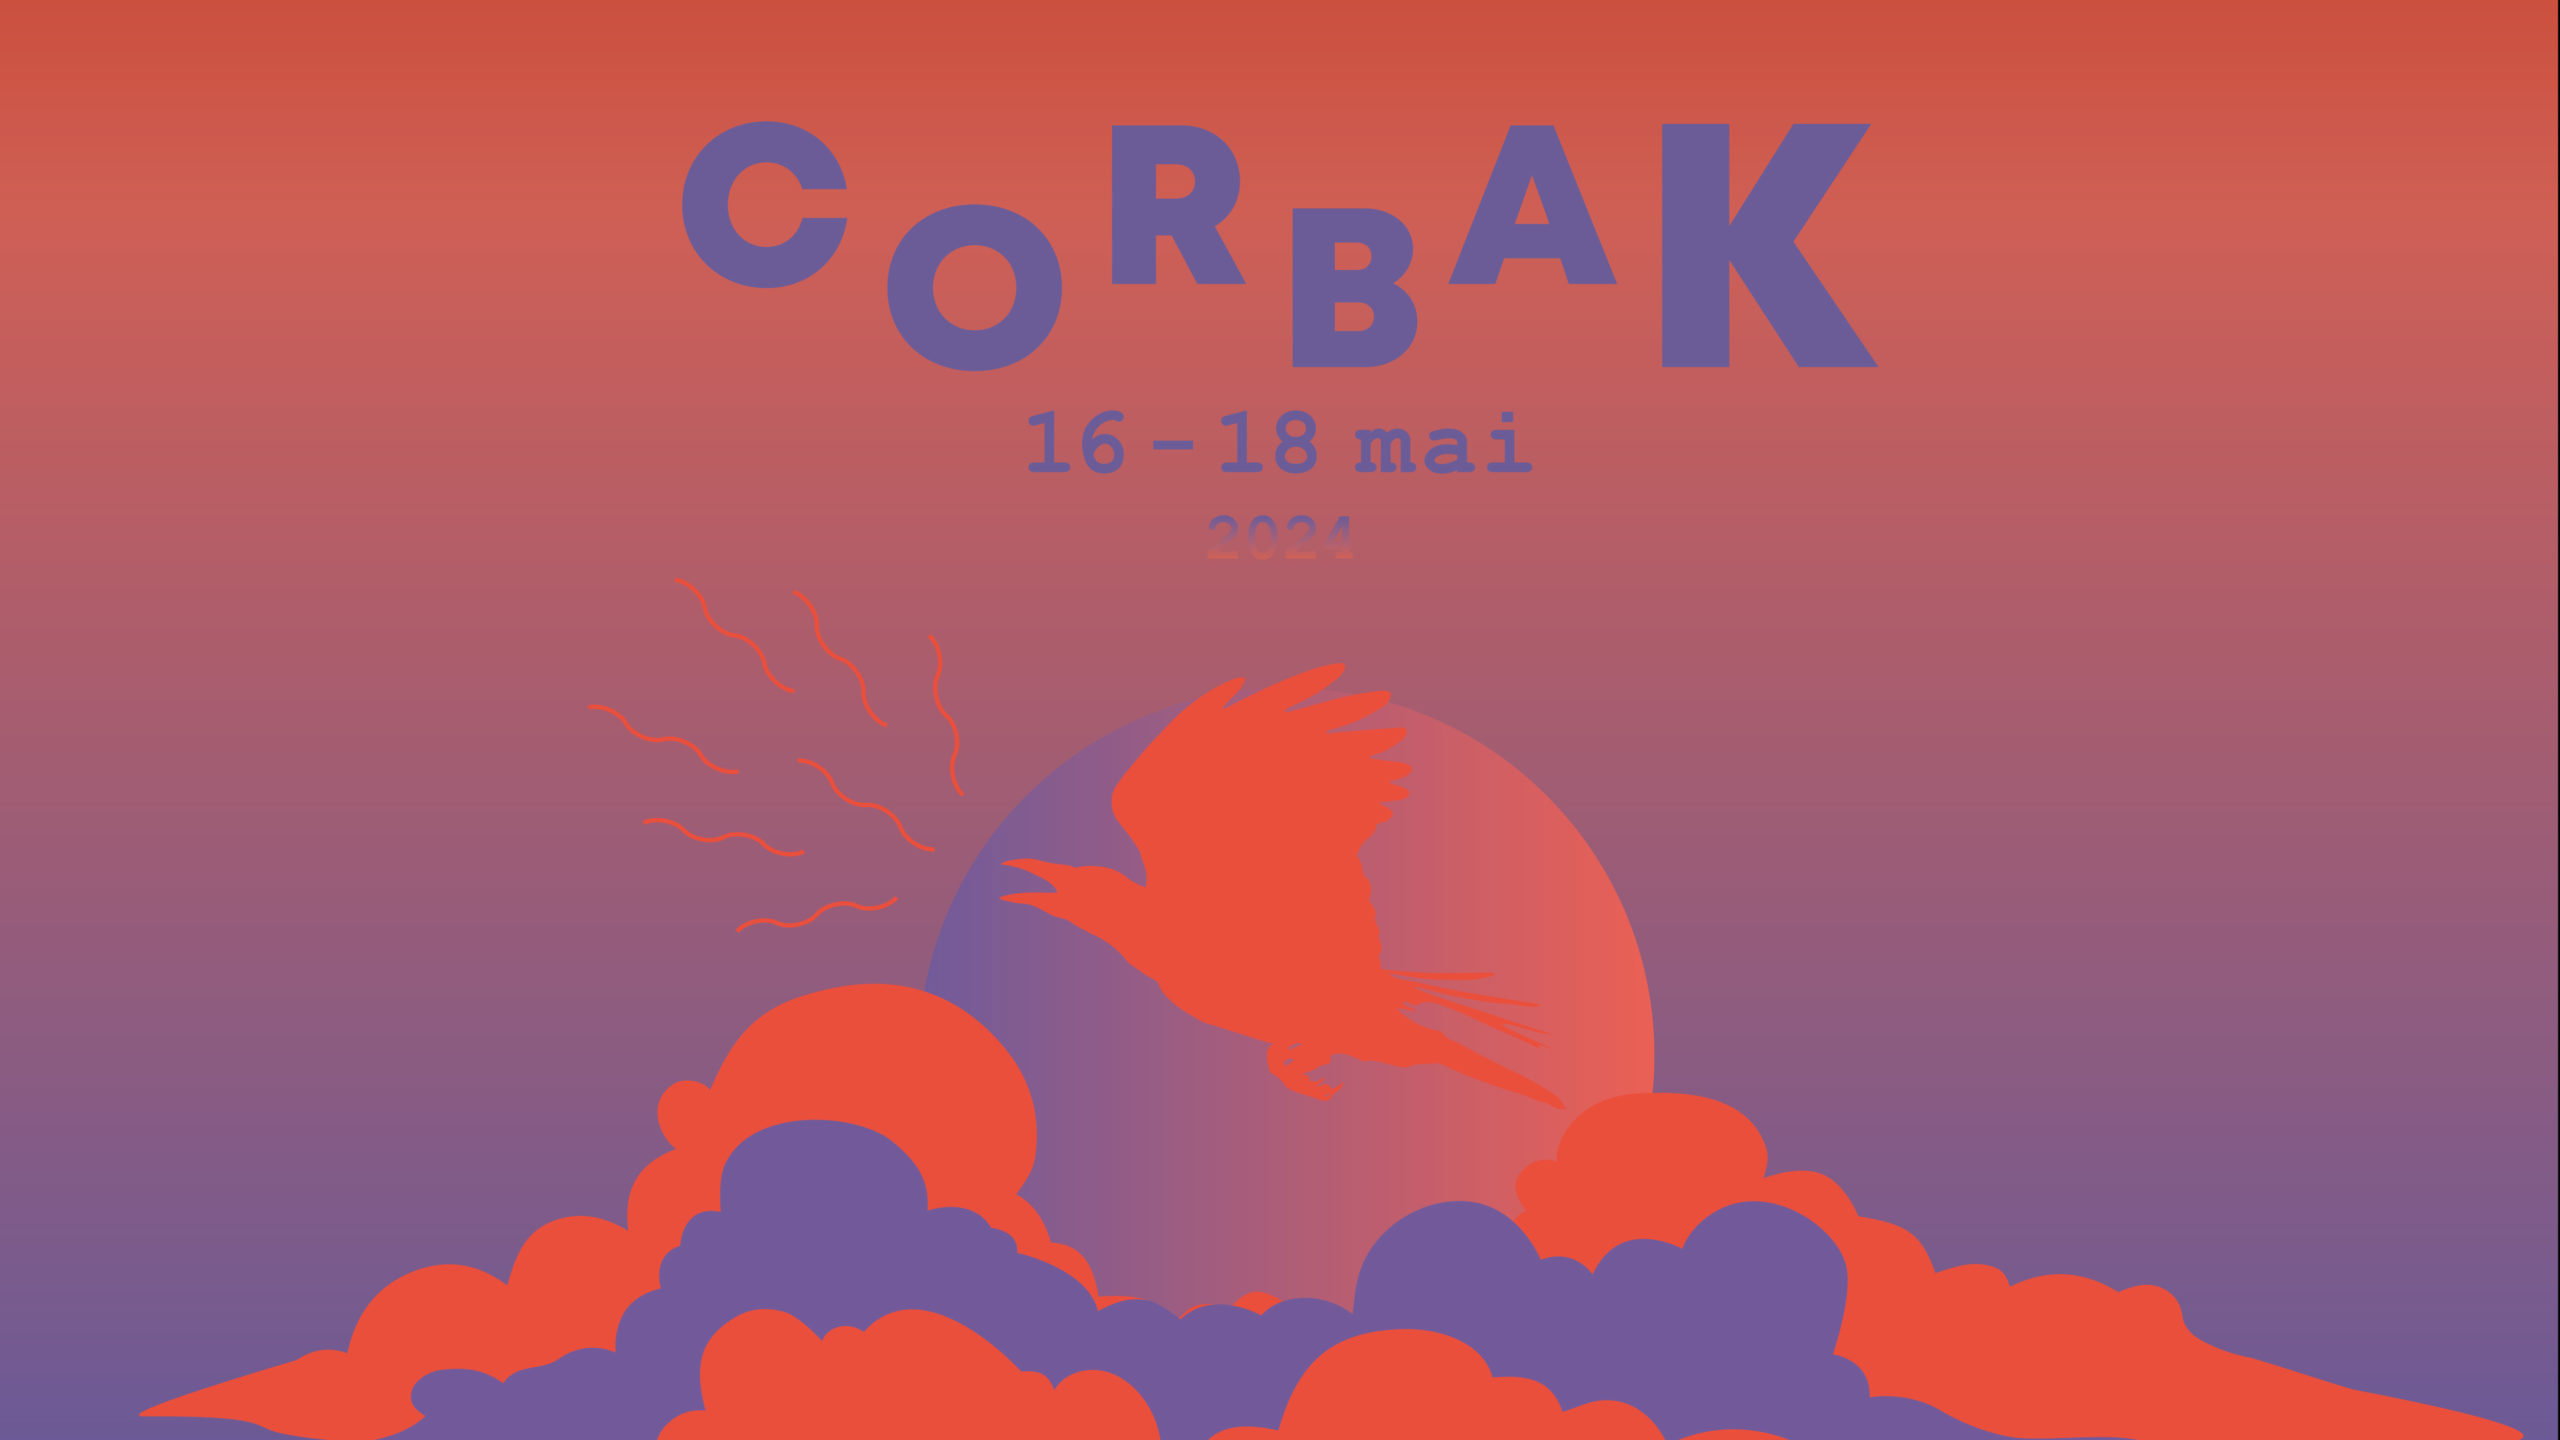 Corbak Festival étoffe sa programmation